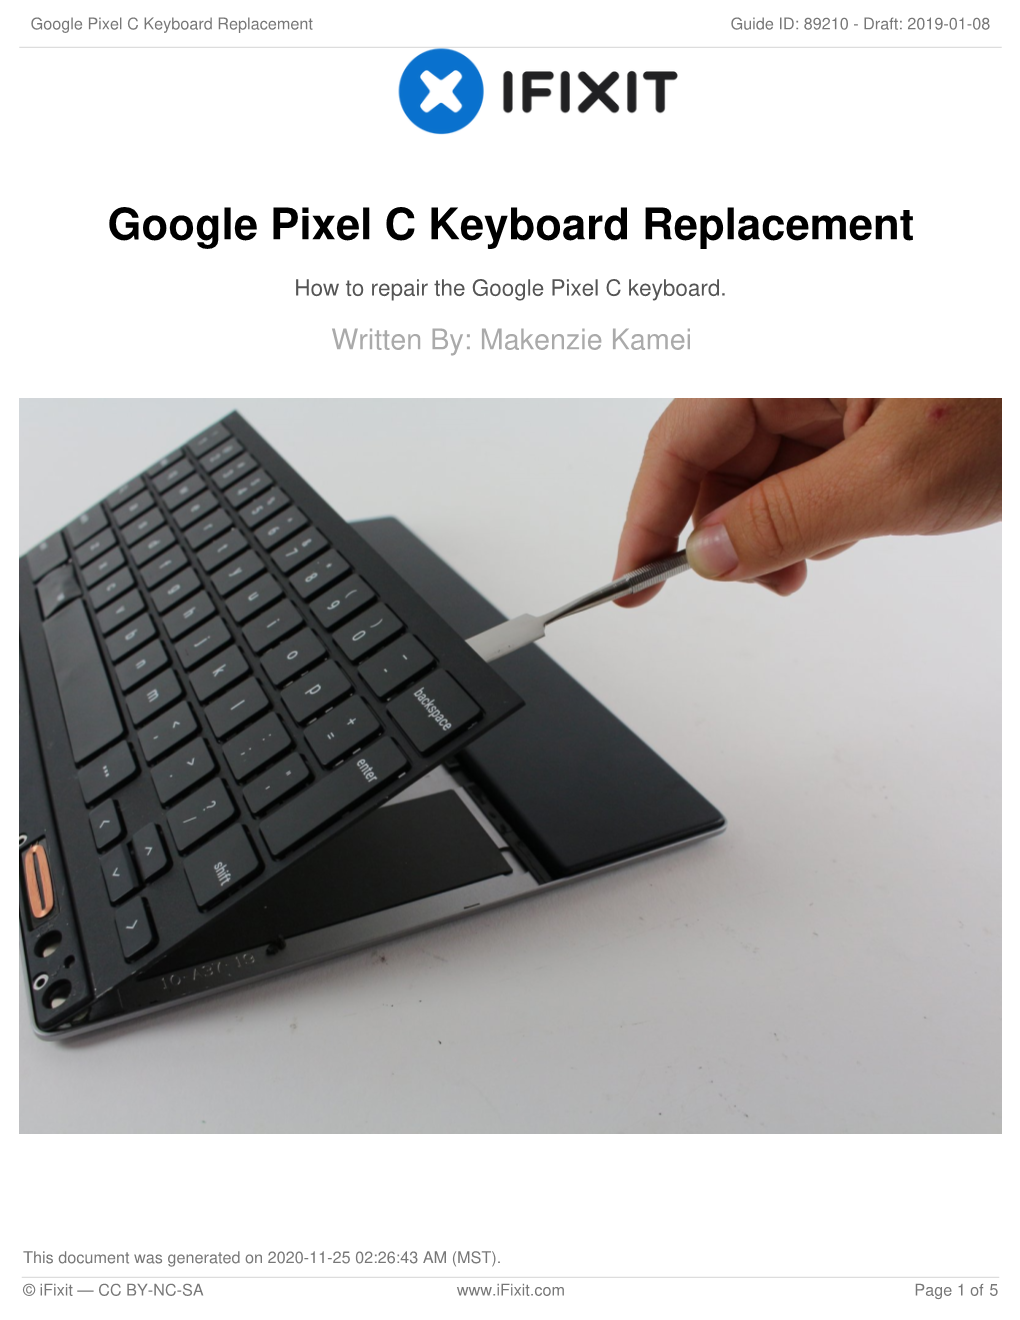 Google Pixel C Keyboard Replacement Guide ID: 89210 - Draft: 2019-01-08